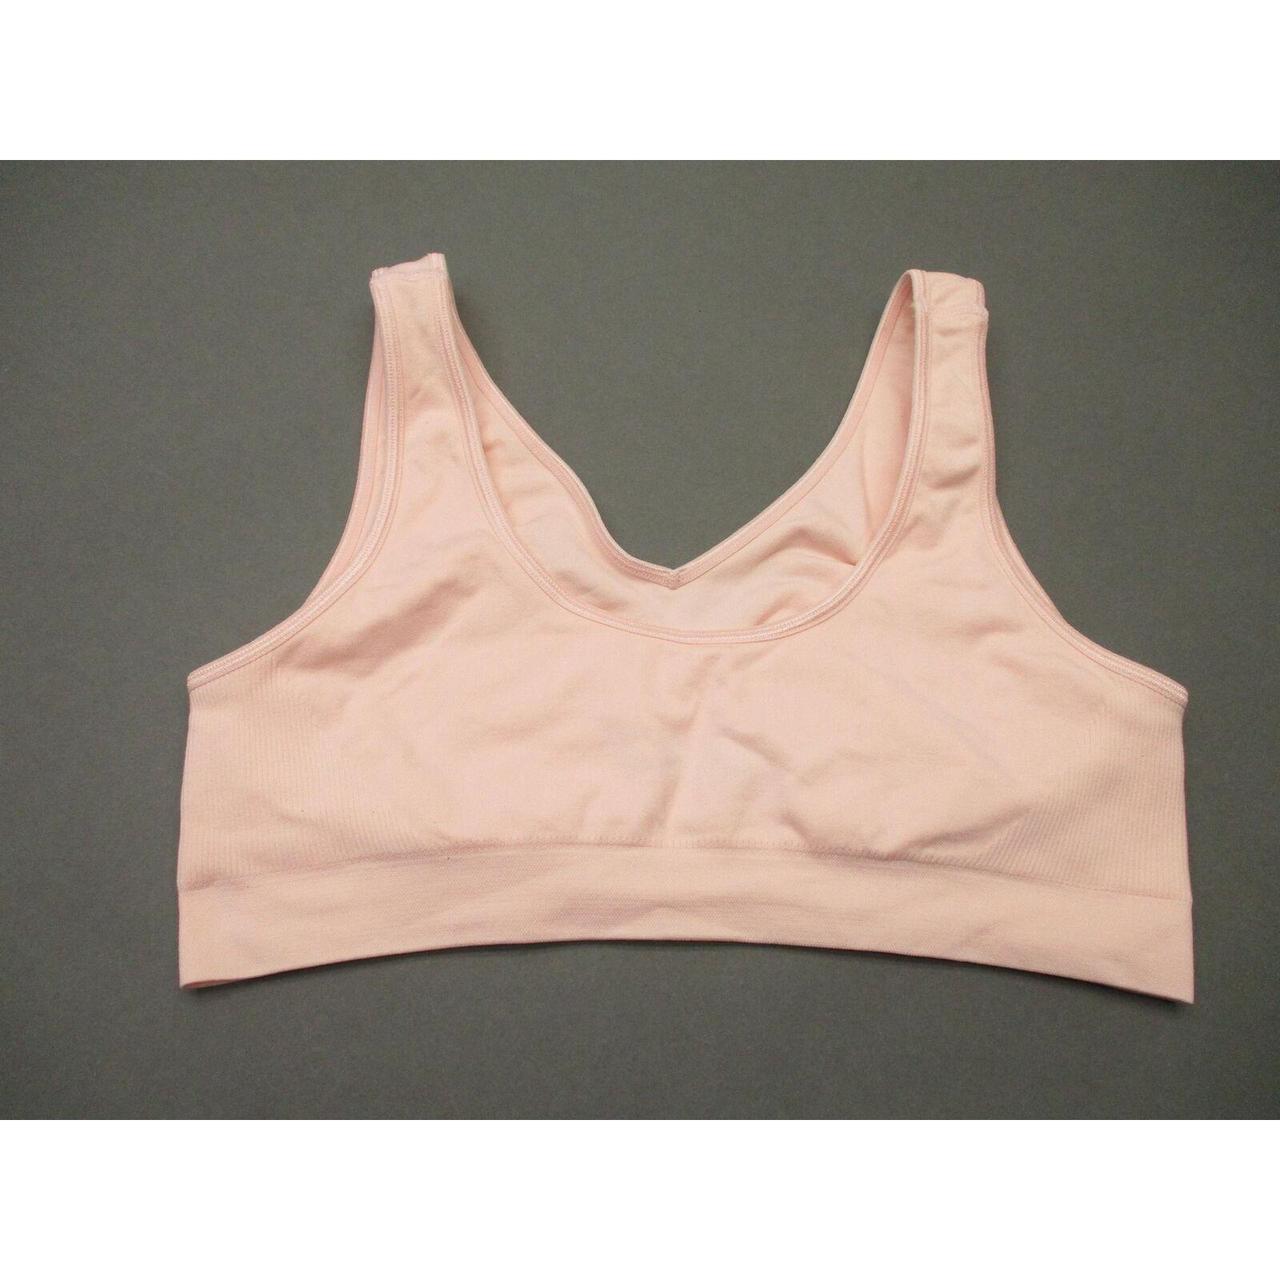 Bali Women's Pink Vests-tanks-camis (3)